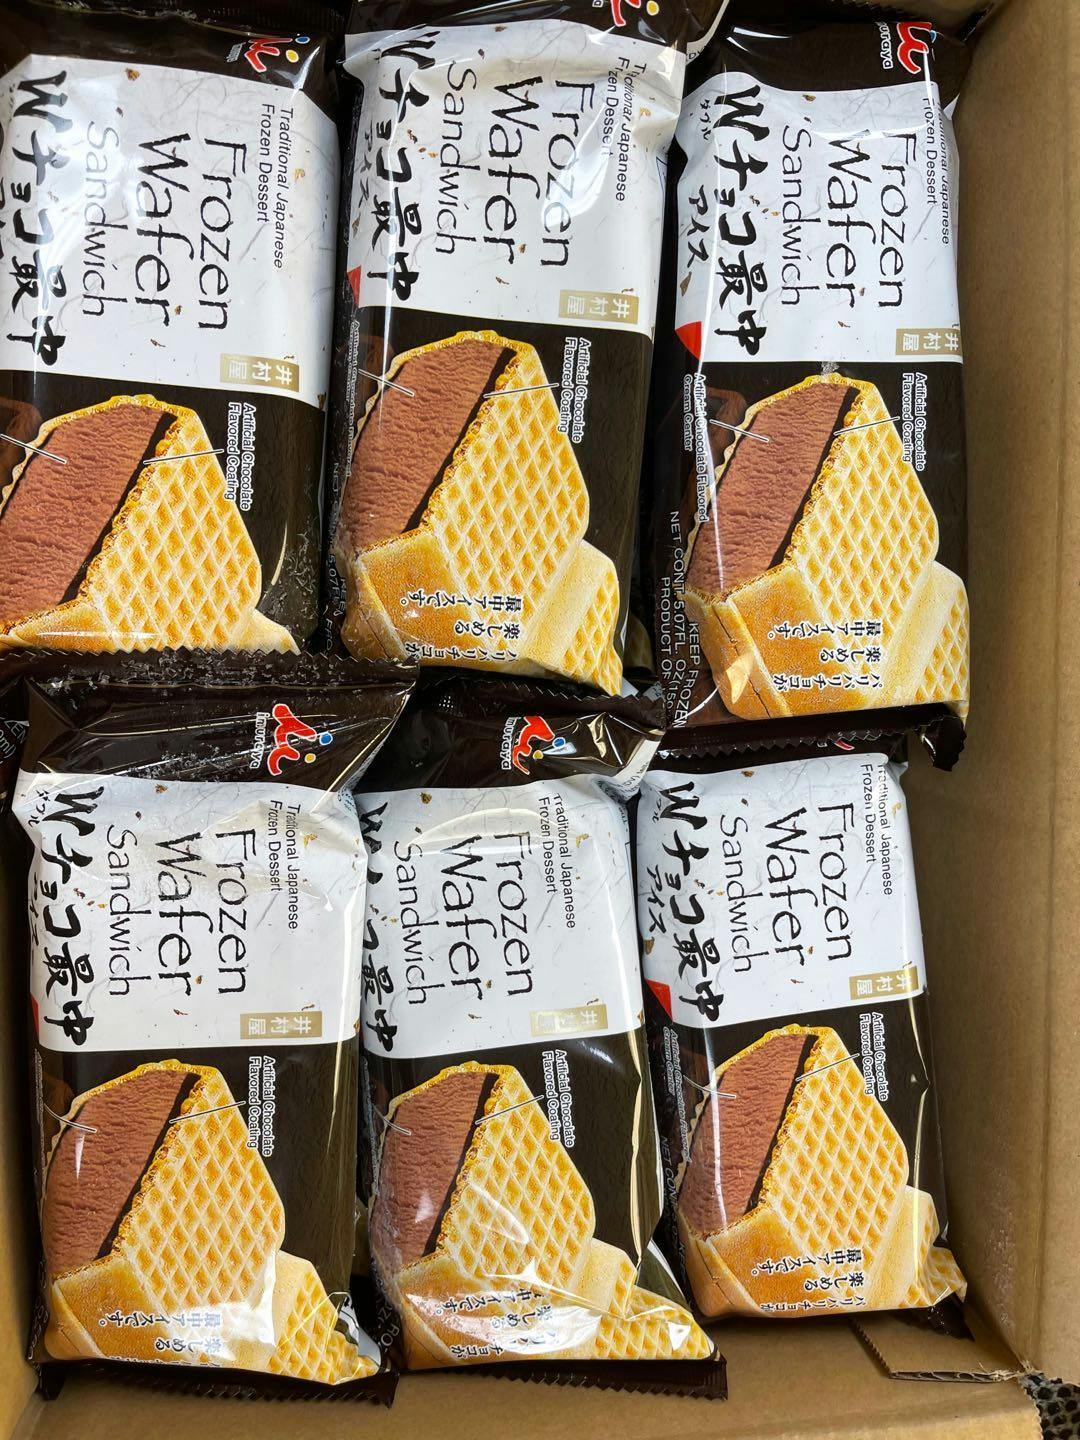 Imuraya 井村屋 Double Chocolate Wafer Sandwich 巧克力华夫 冰激凌 整箱 case